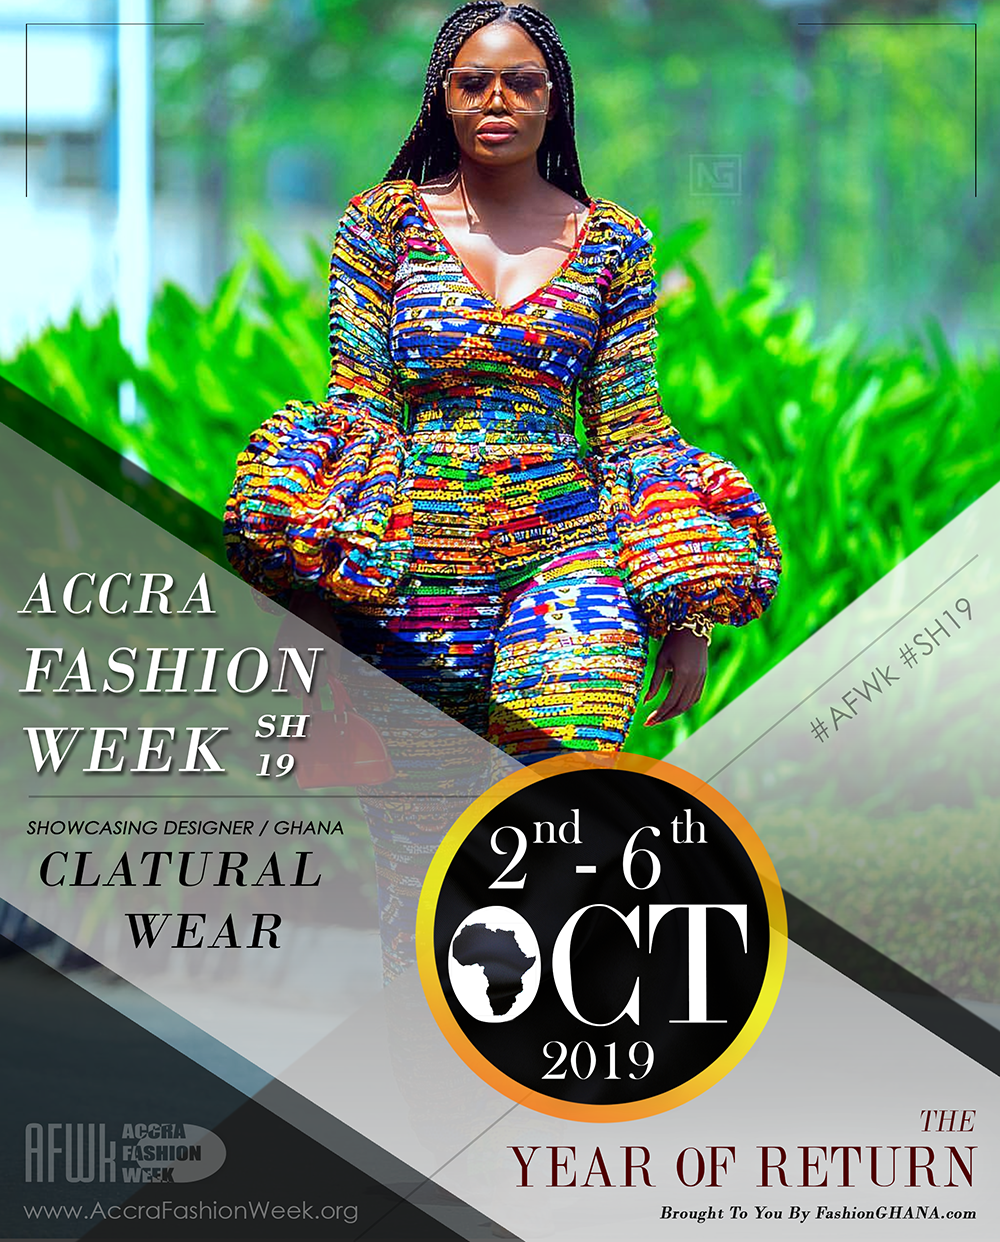 Accra Fashion Week SH19 Headlined 'YEAR OF RETURN' As Ghana Is Set To ...